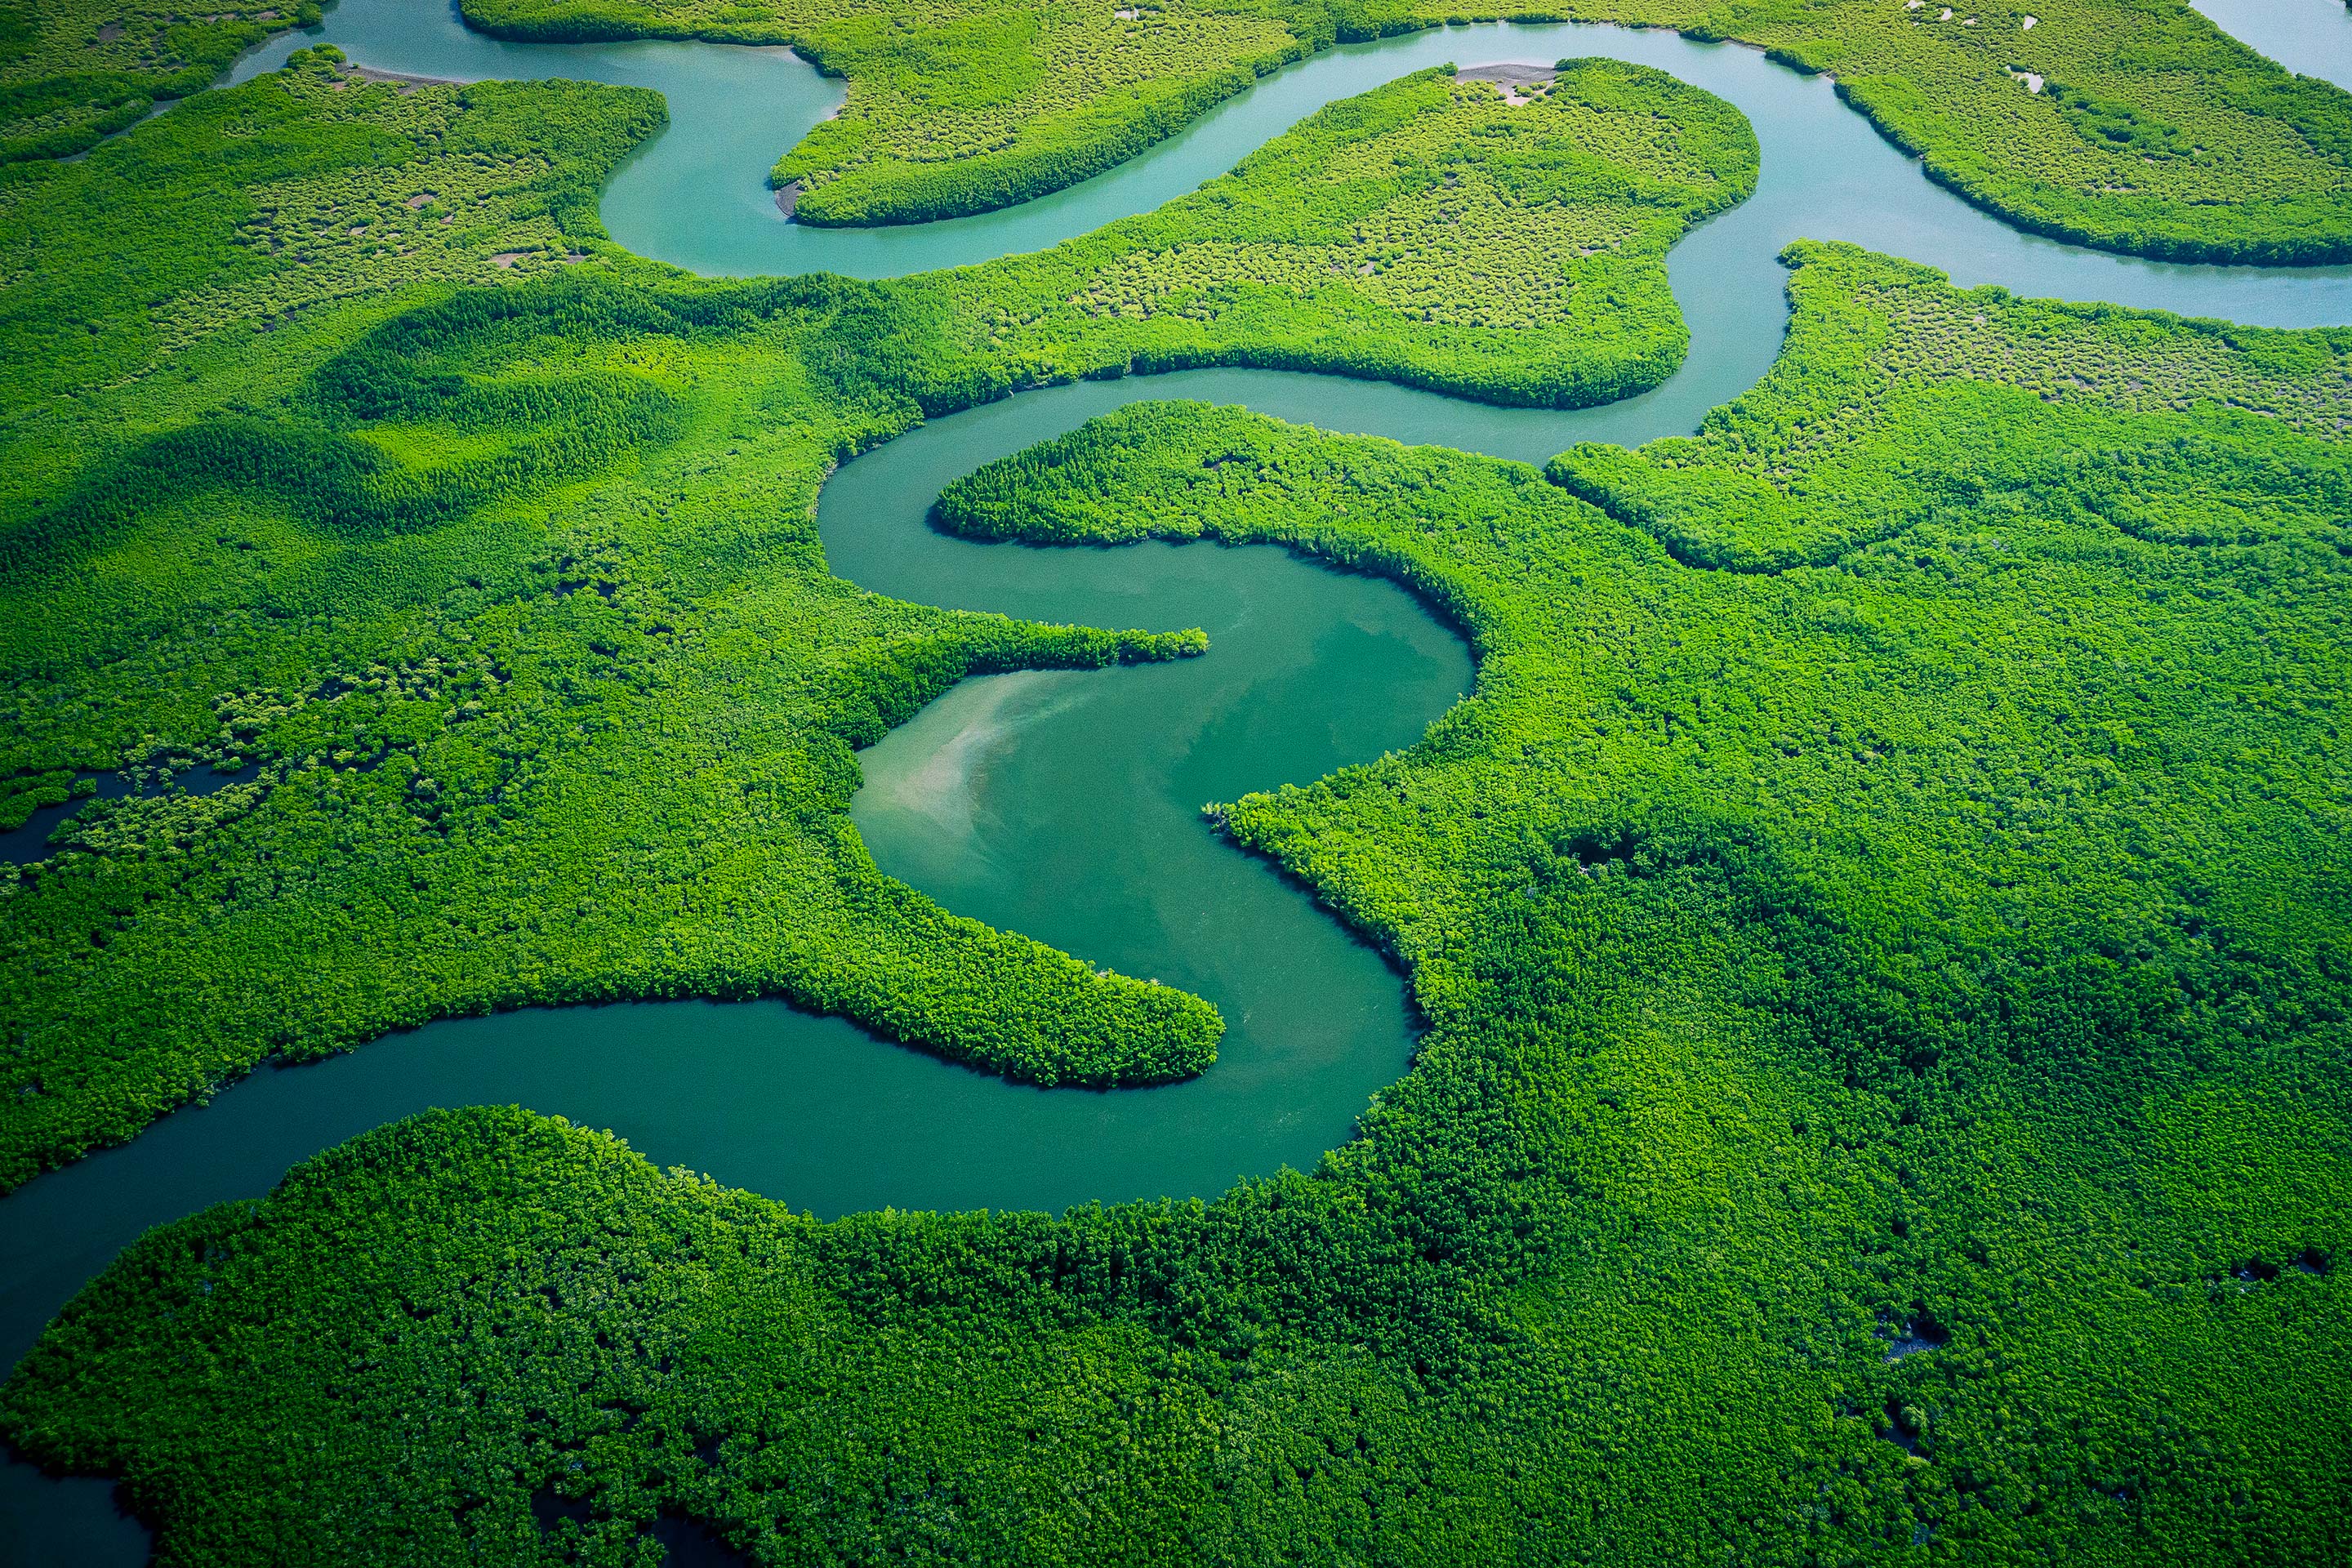 A river winds through a green swamp representing customization.